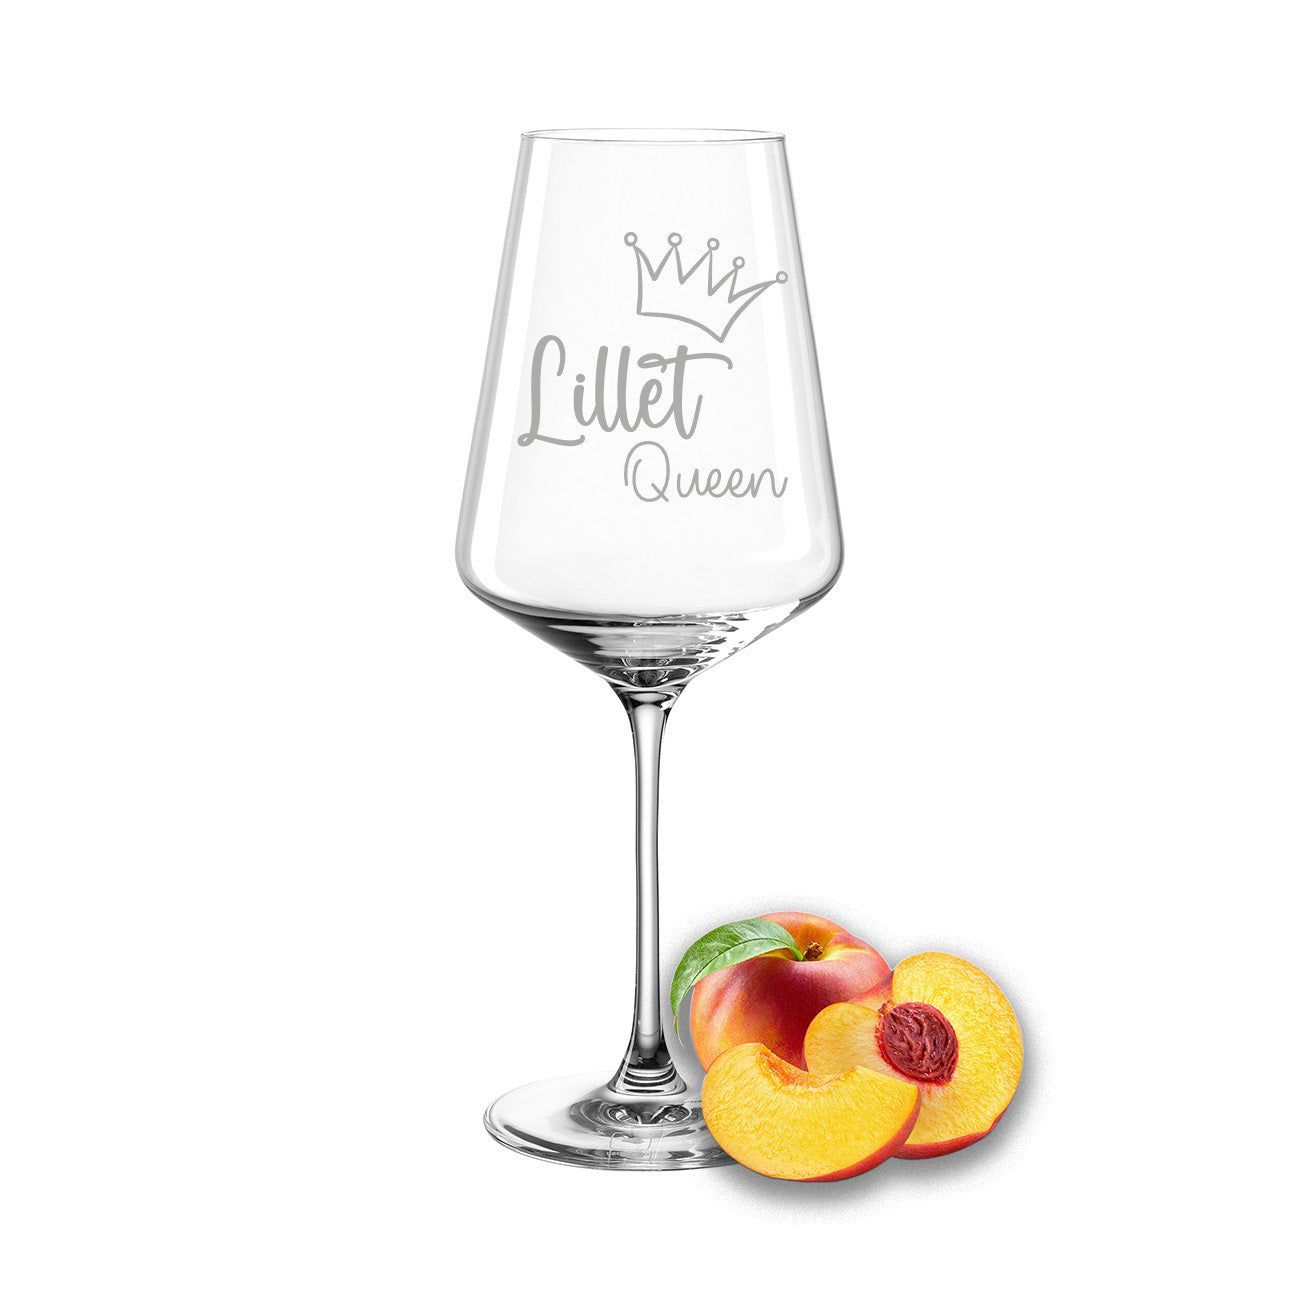 Weinglas mit Gravur Leonardo Puccini "LILLET QUEEN"